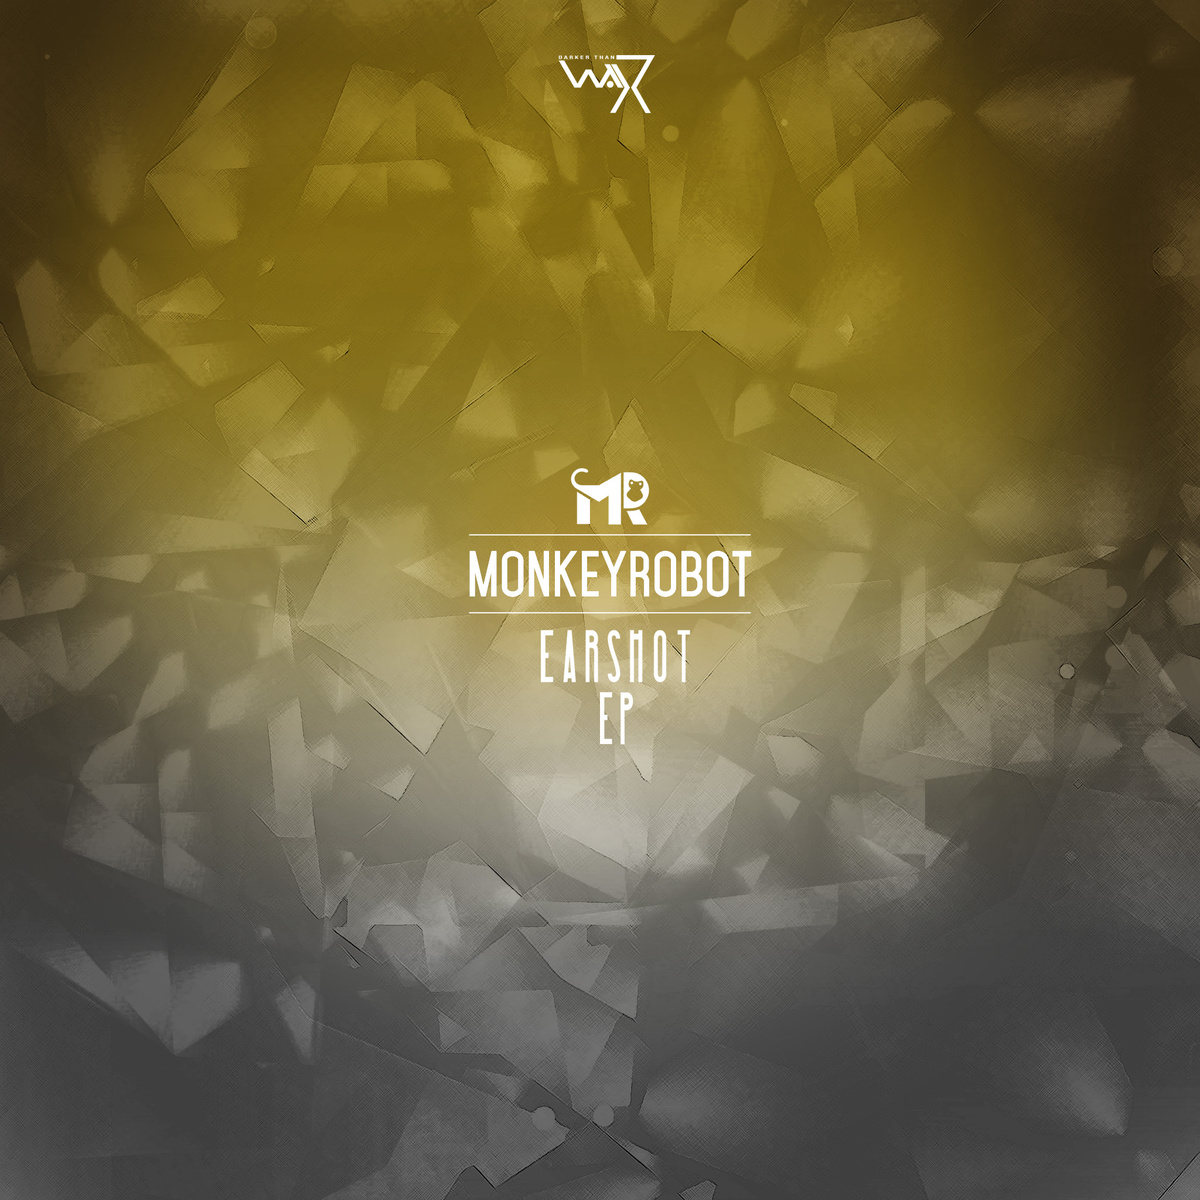 MonkeyRobot "Earshot" Release | @darkerthanwax